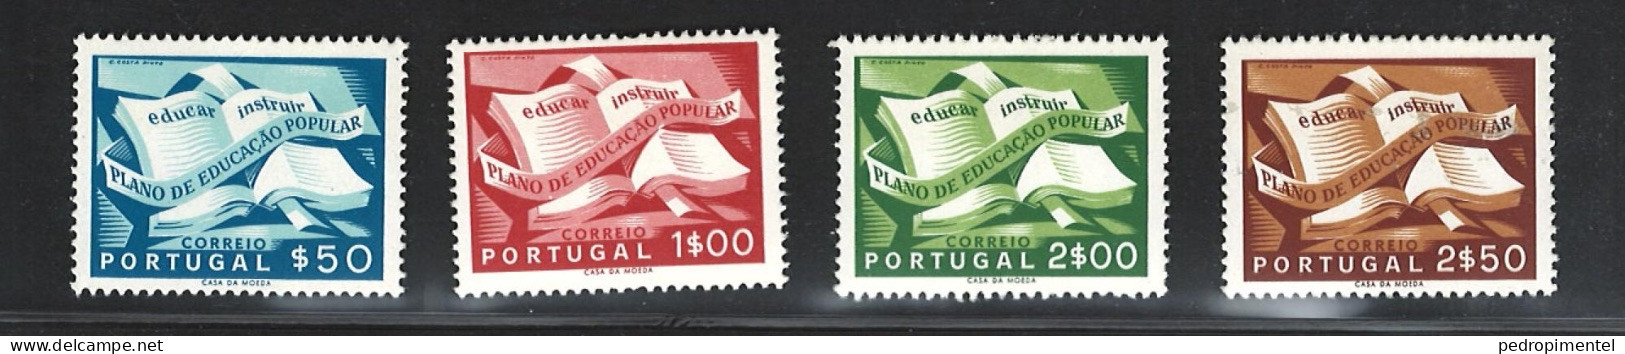 Portugal Stamps 1954 "Popular Education Plan" Condition MNH #796-799 - Ongebruikt